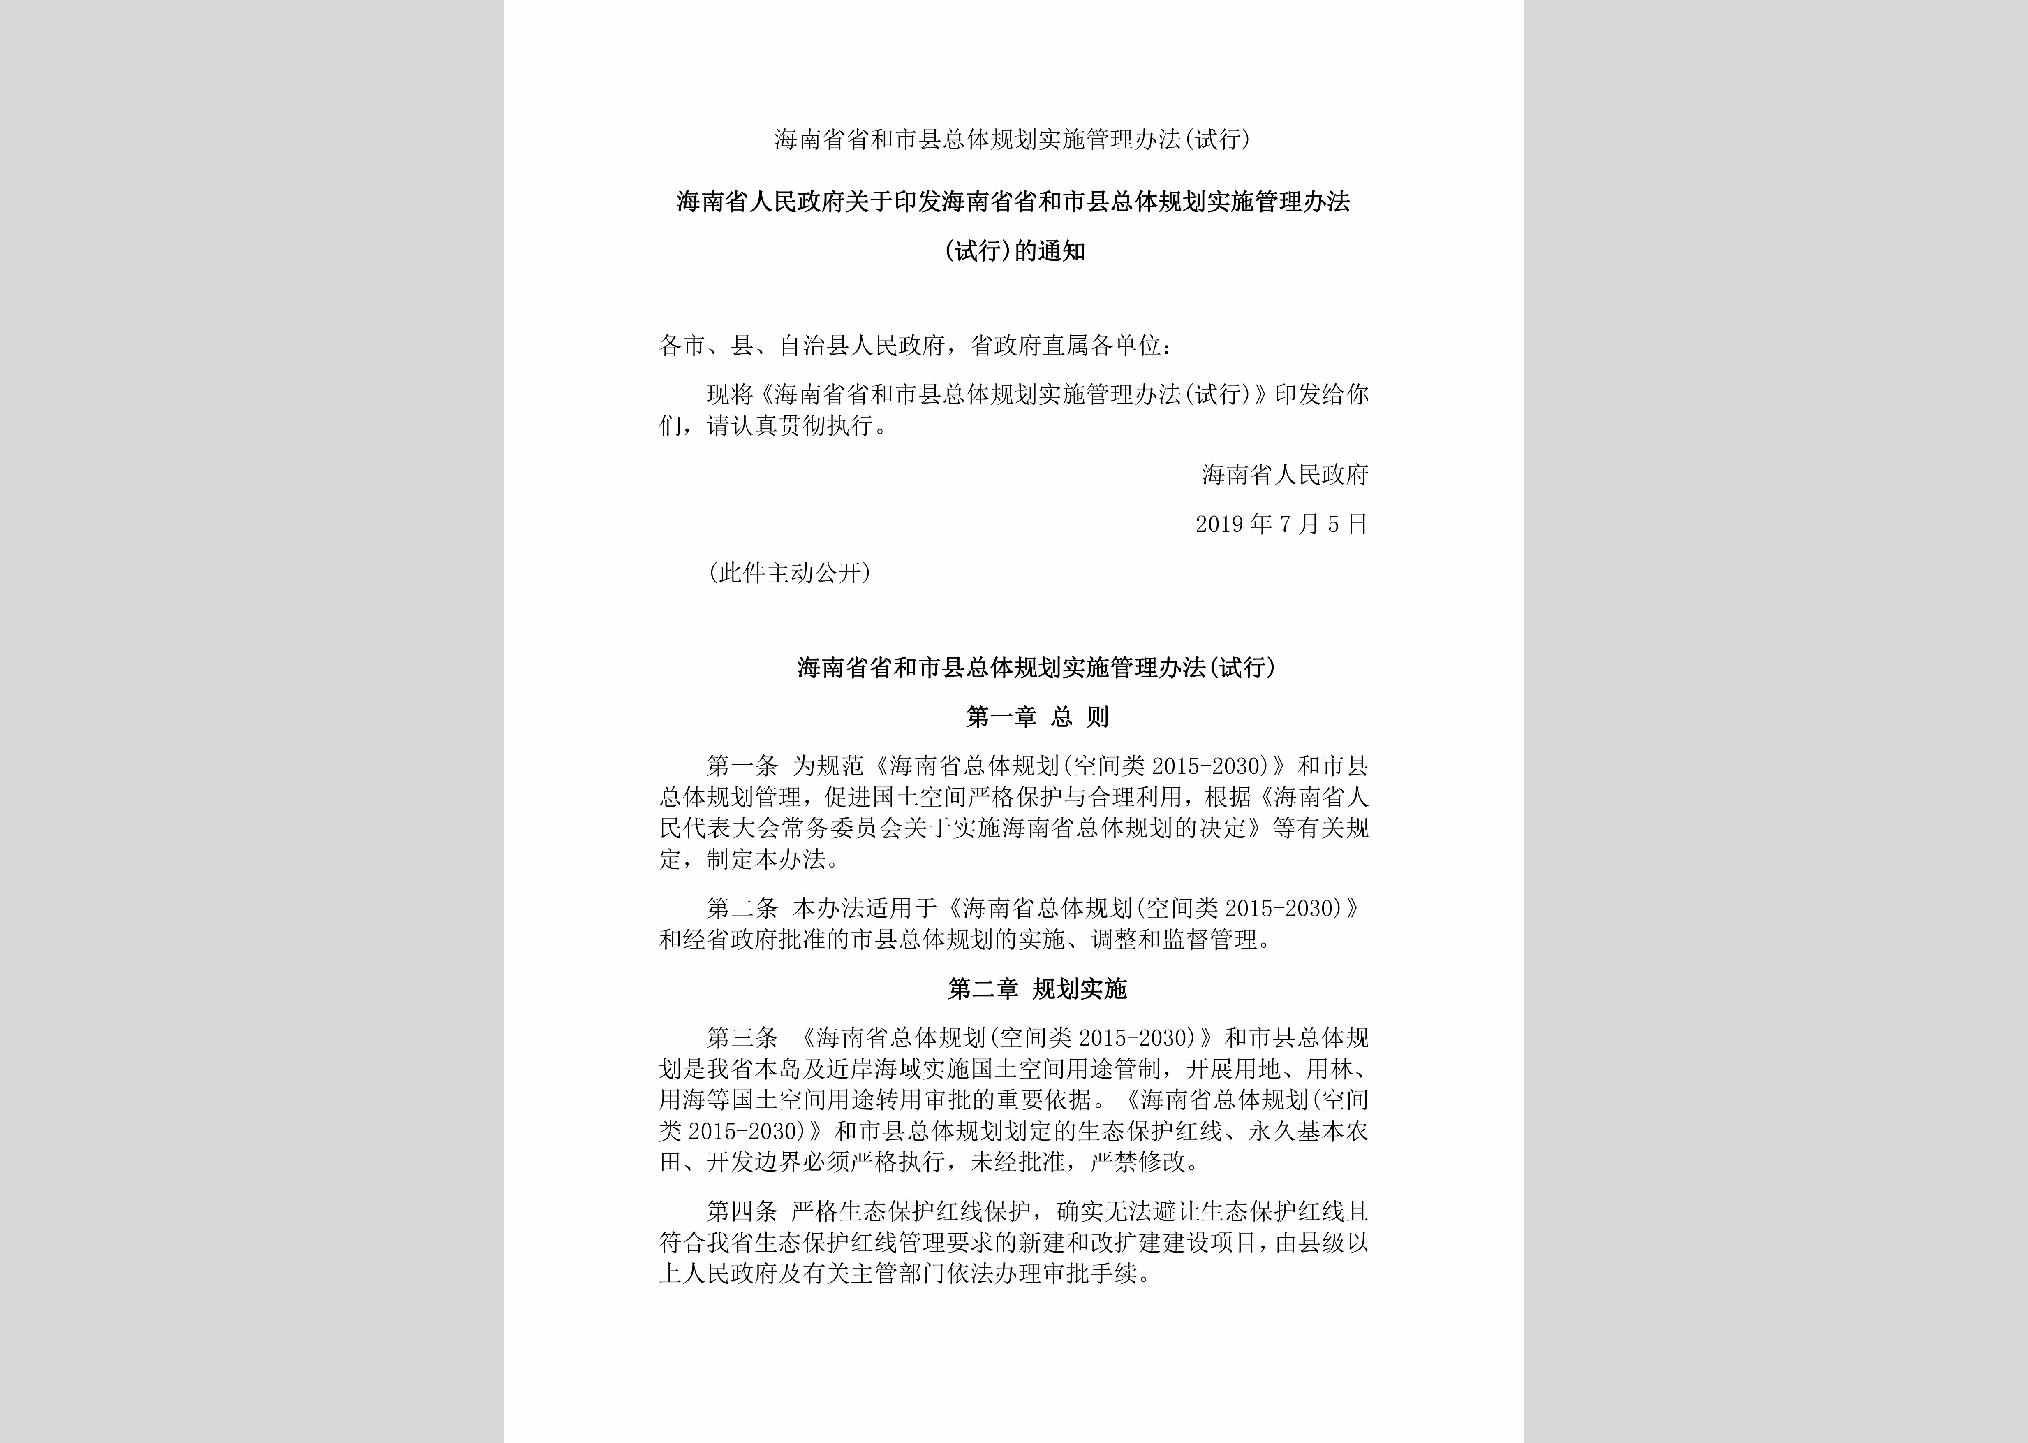 HAN-ZTGHSSGL-2019：海南省省和市县总体规划实施管理办法(试行)